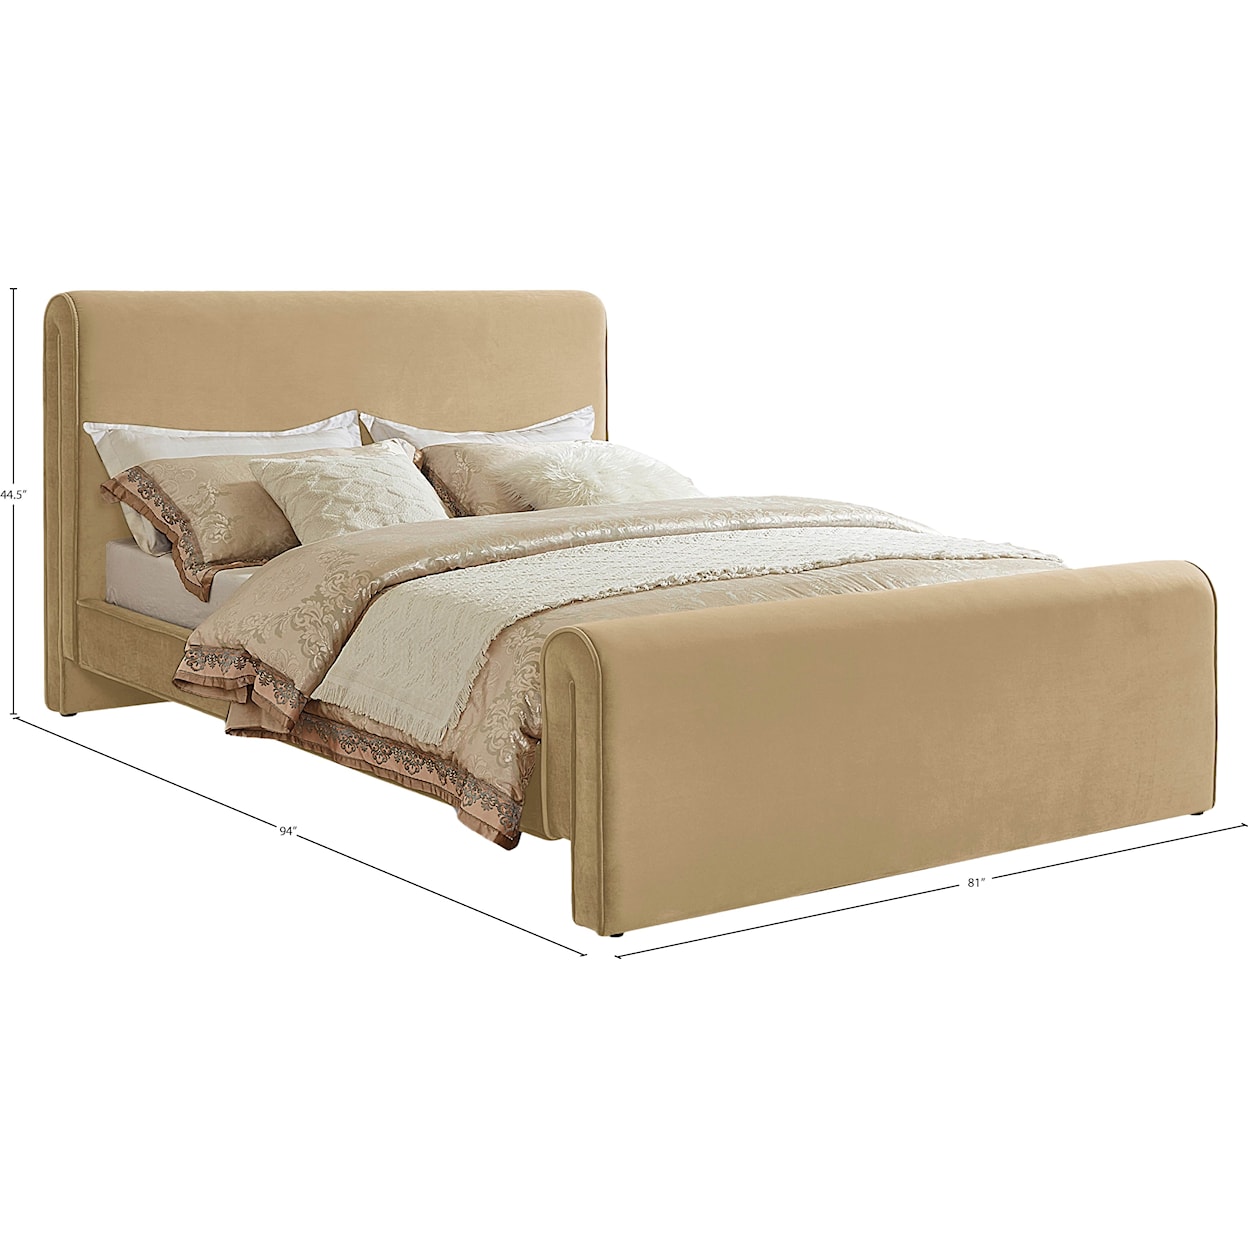 Meridian Furniture Sloan King Bed (3 Boxes)